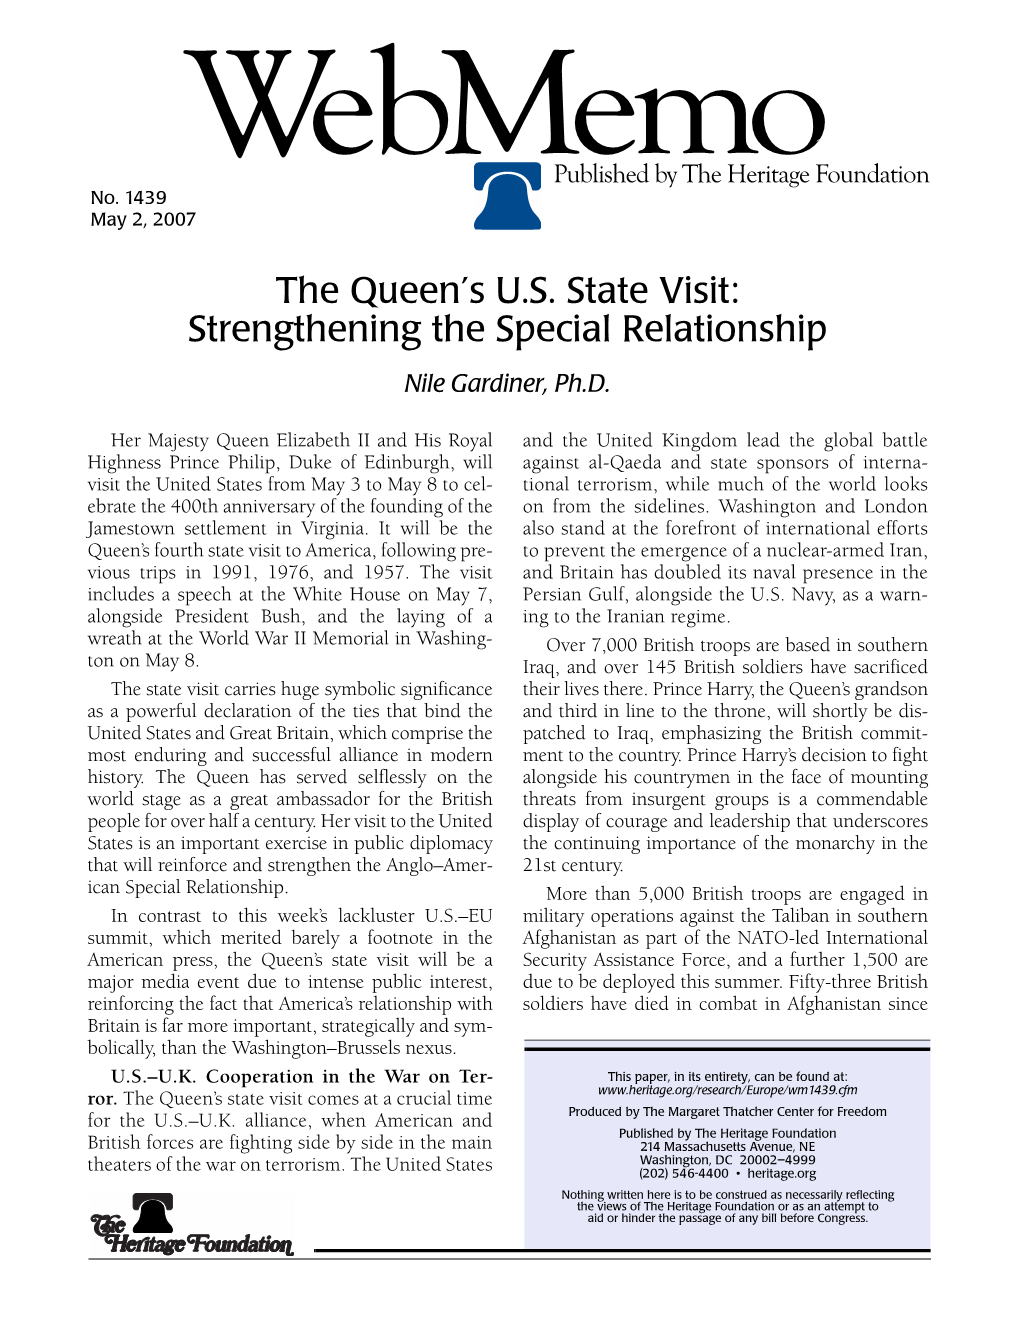 Strengthening the Special Relationship Nile Gardiner, Ph.D